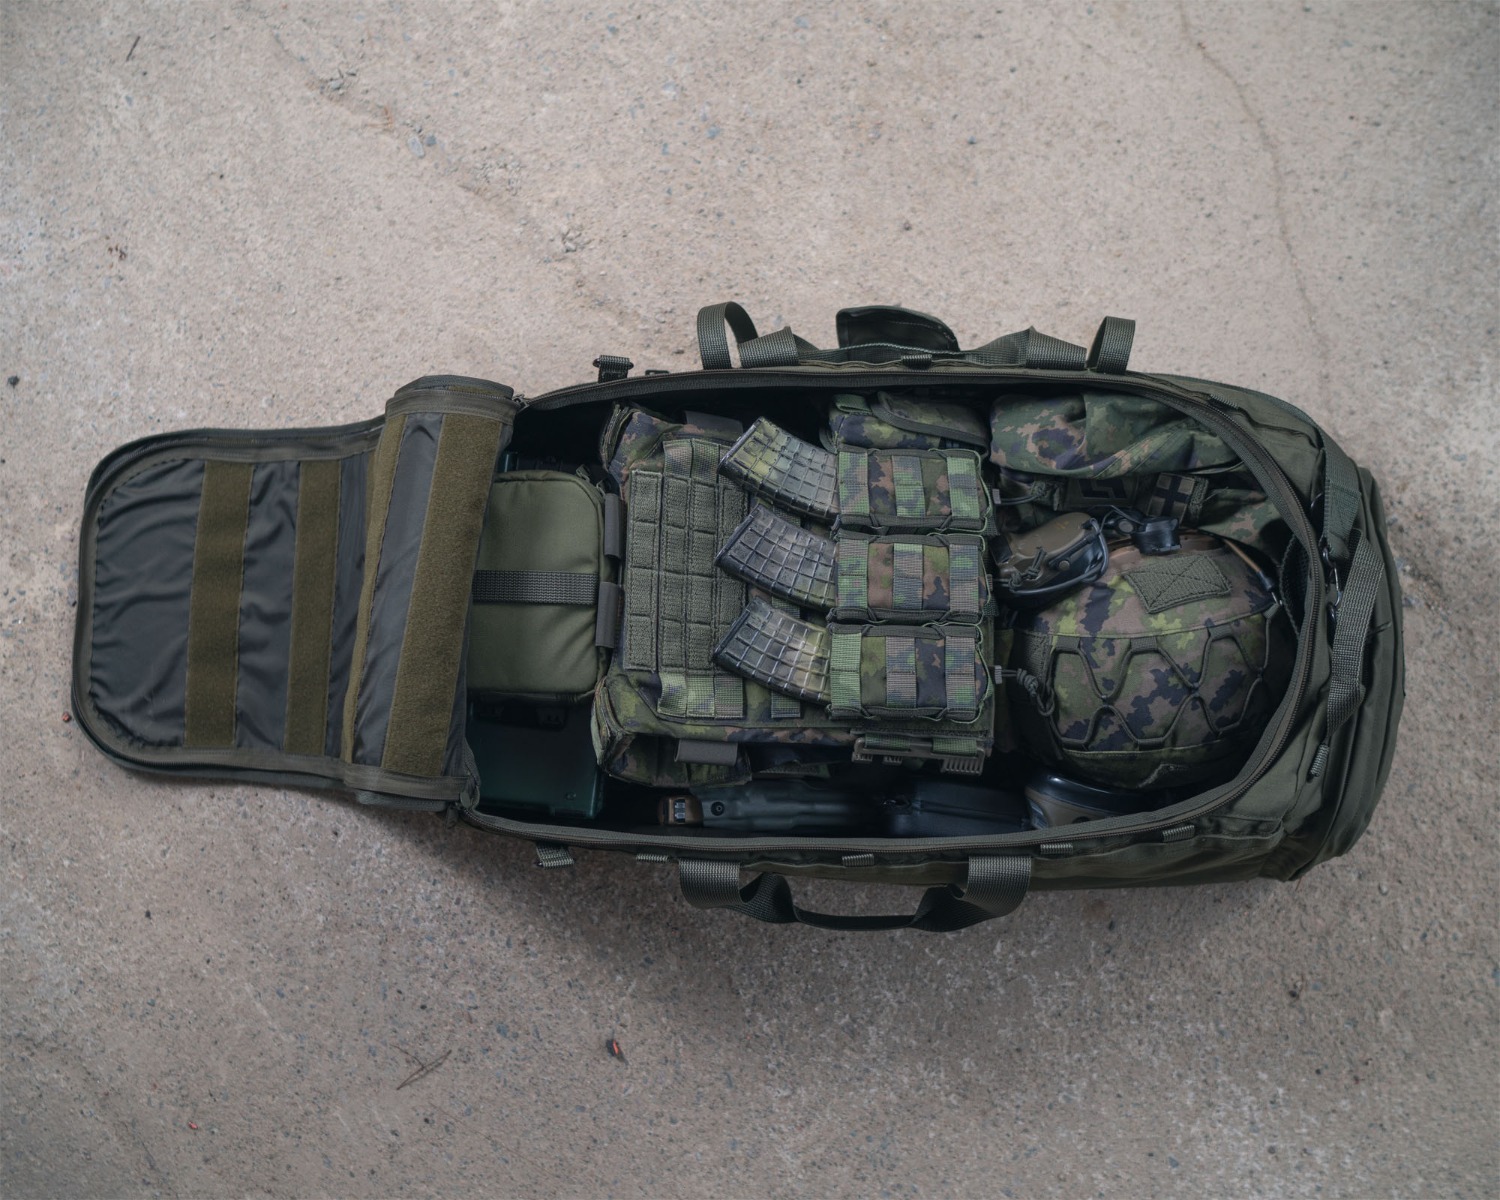 transportna torba, vojaška torba, fitnes torba, strelska torba, SAVOTTA, B33 Tactical, B33 opremljen.si, B33 army shop, army shop, trgovina z vojaško opremo, vojaška trgovina, outdoor trgovina